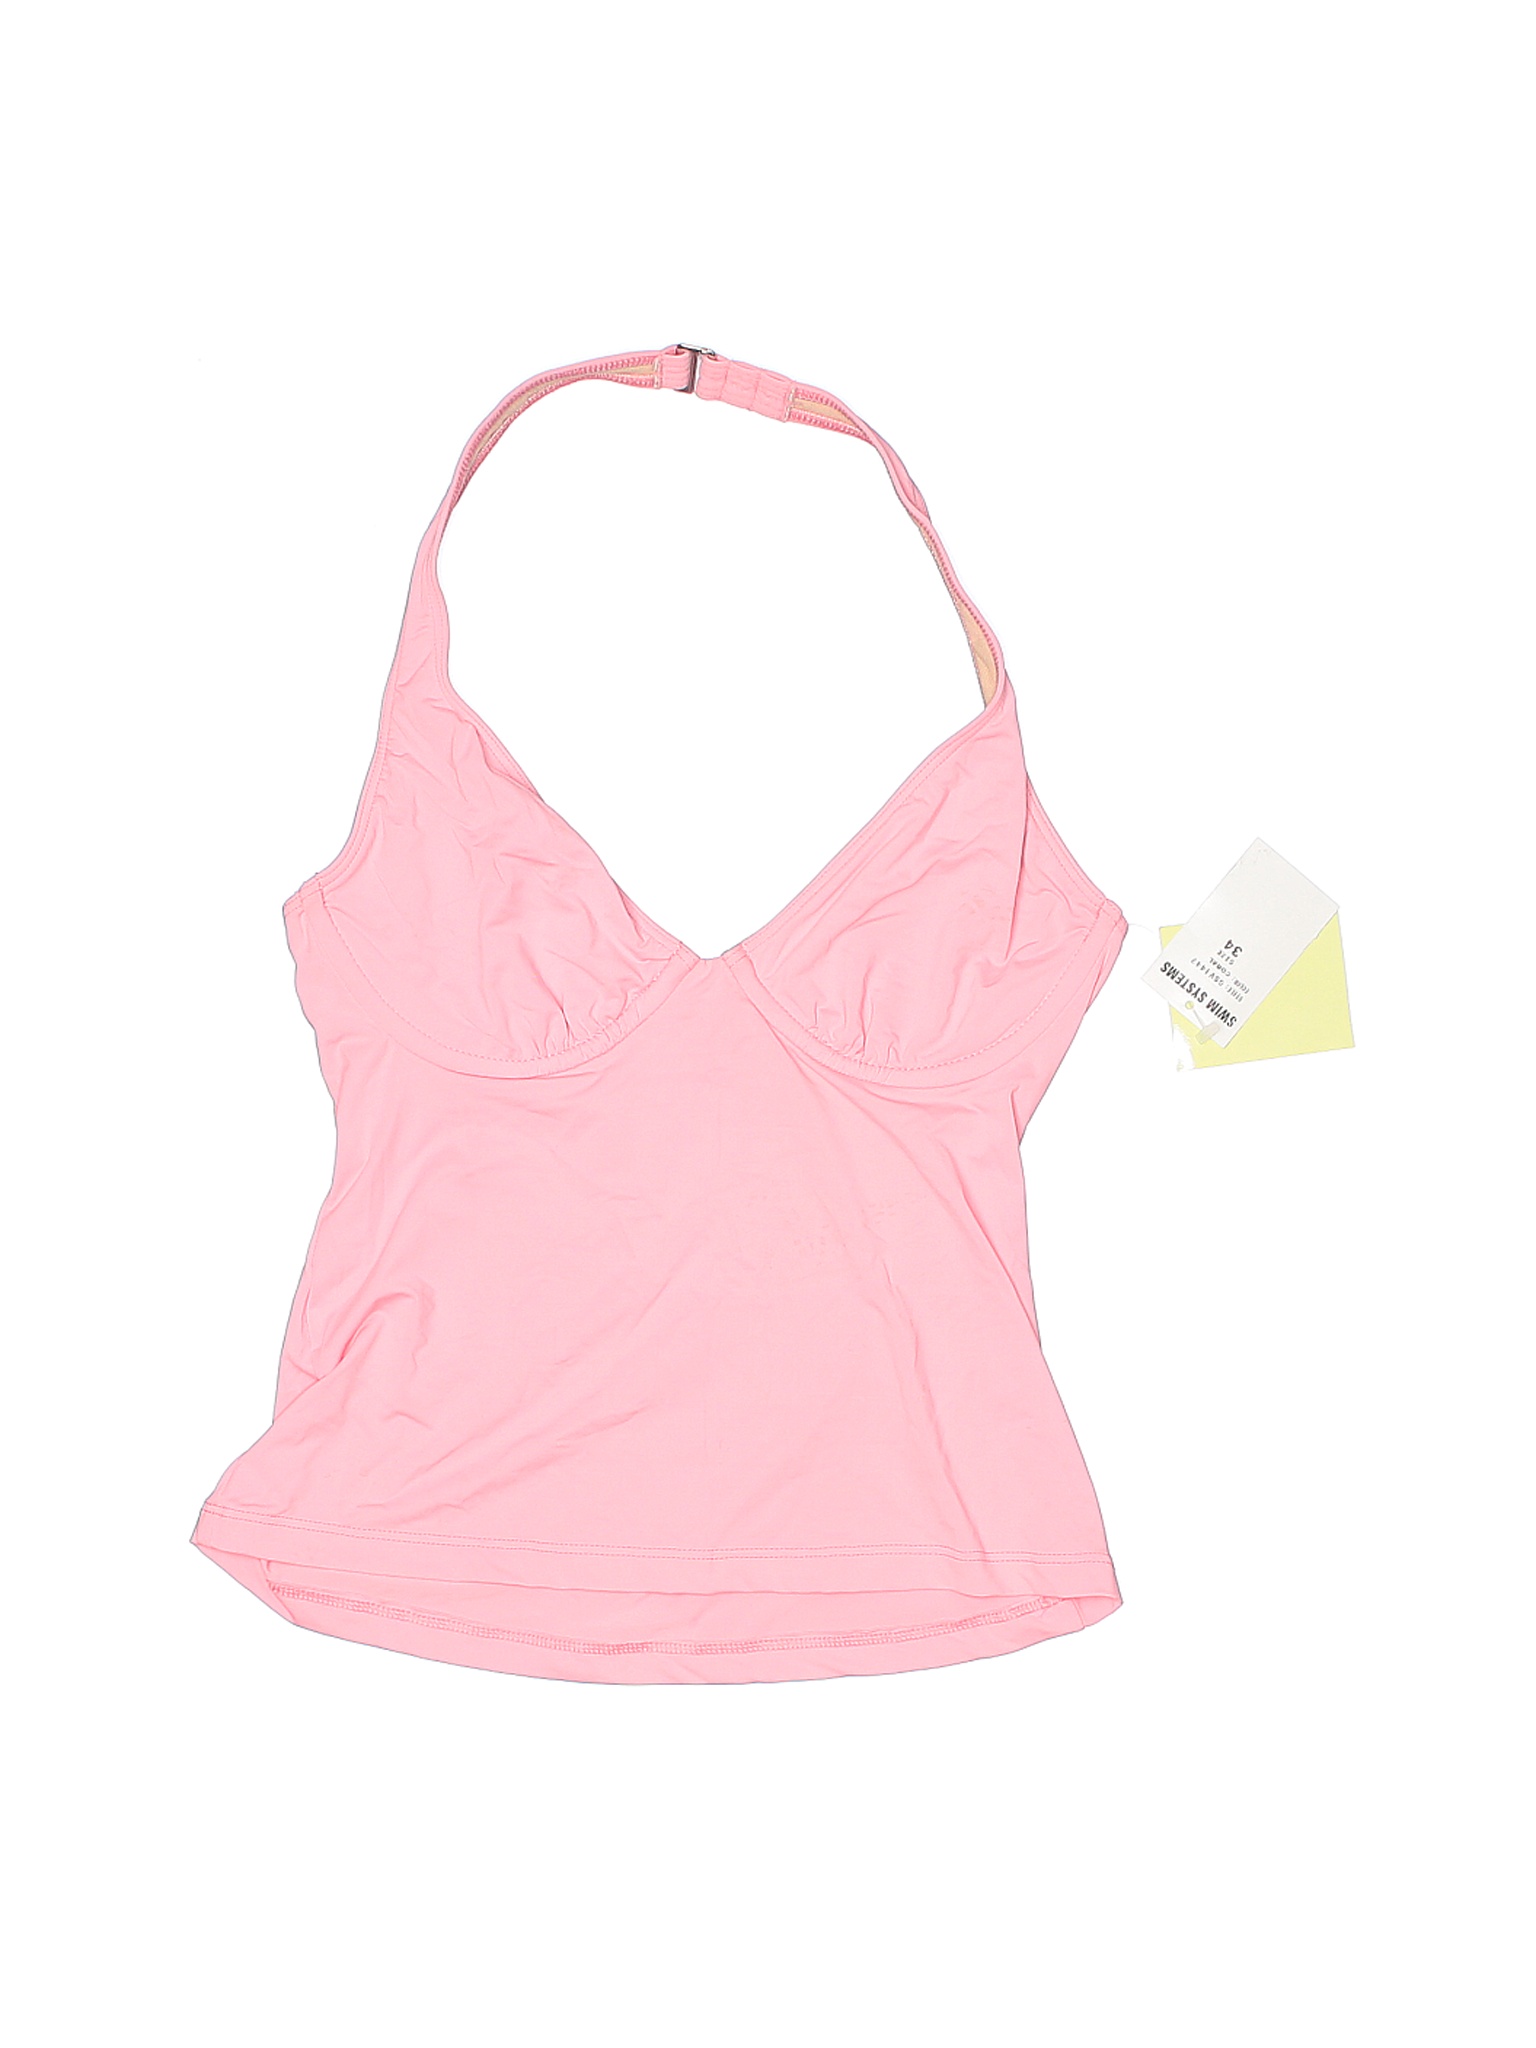 NWT Swim Systems Women Pink Swimsuit Top 34 eur | eBay